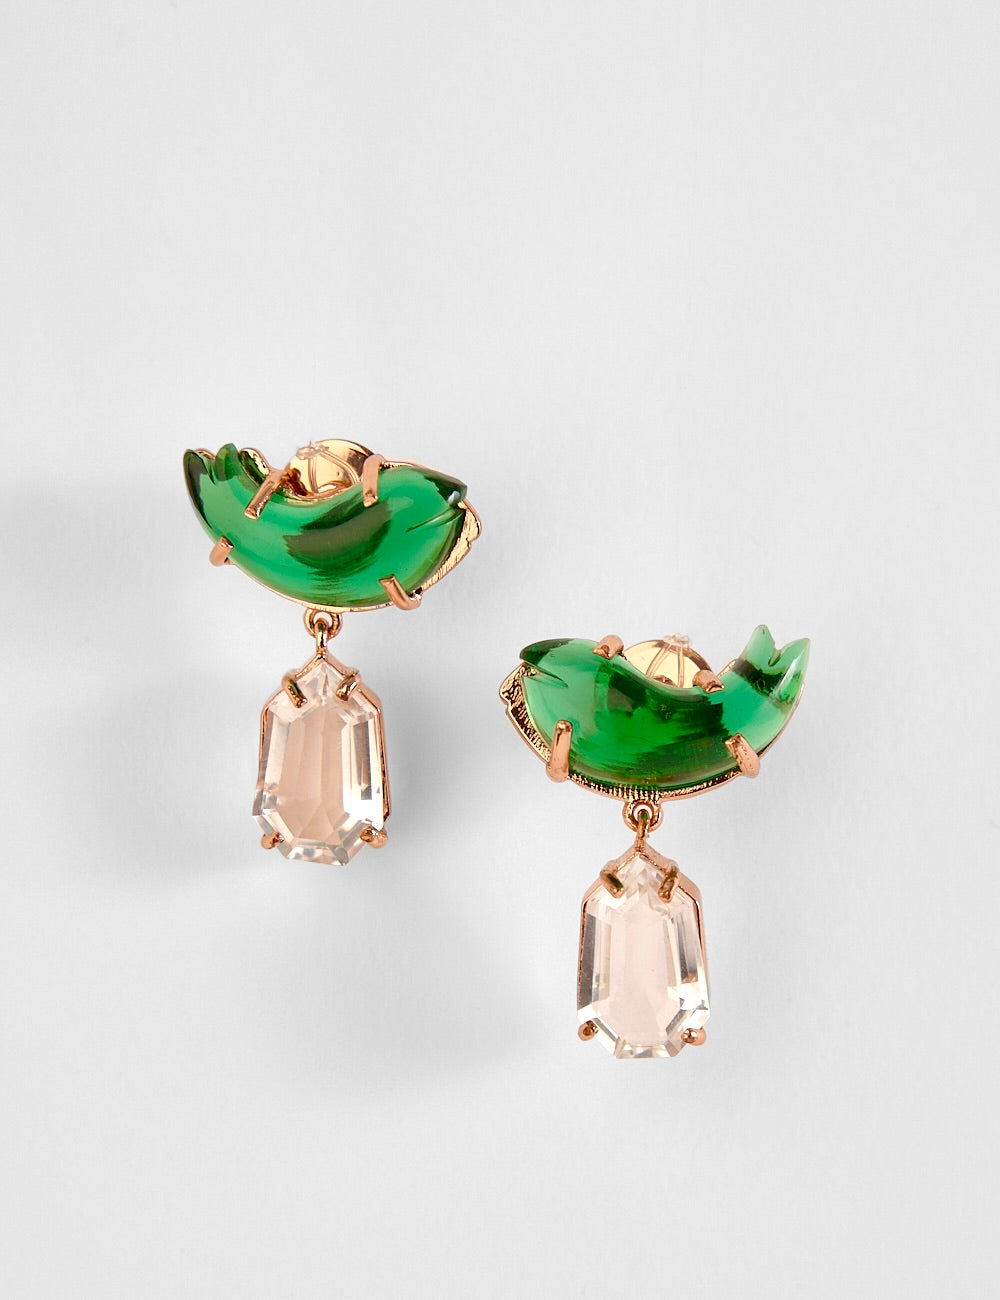 Buy Emerald Earrings Angelina Jolie Kyle Richards LARGE Emerald Online in  India  Etsy